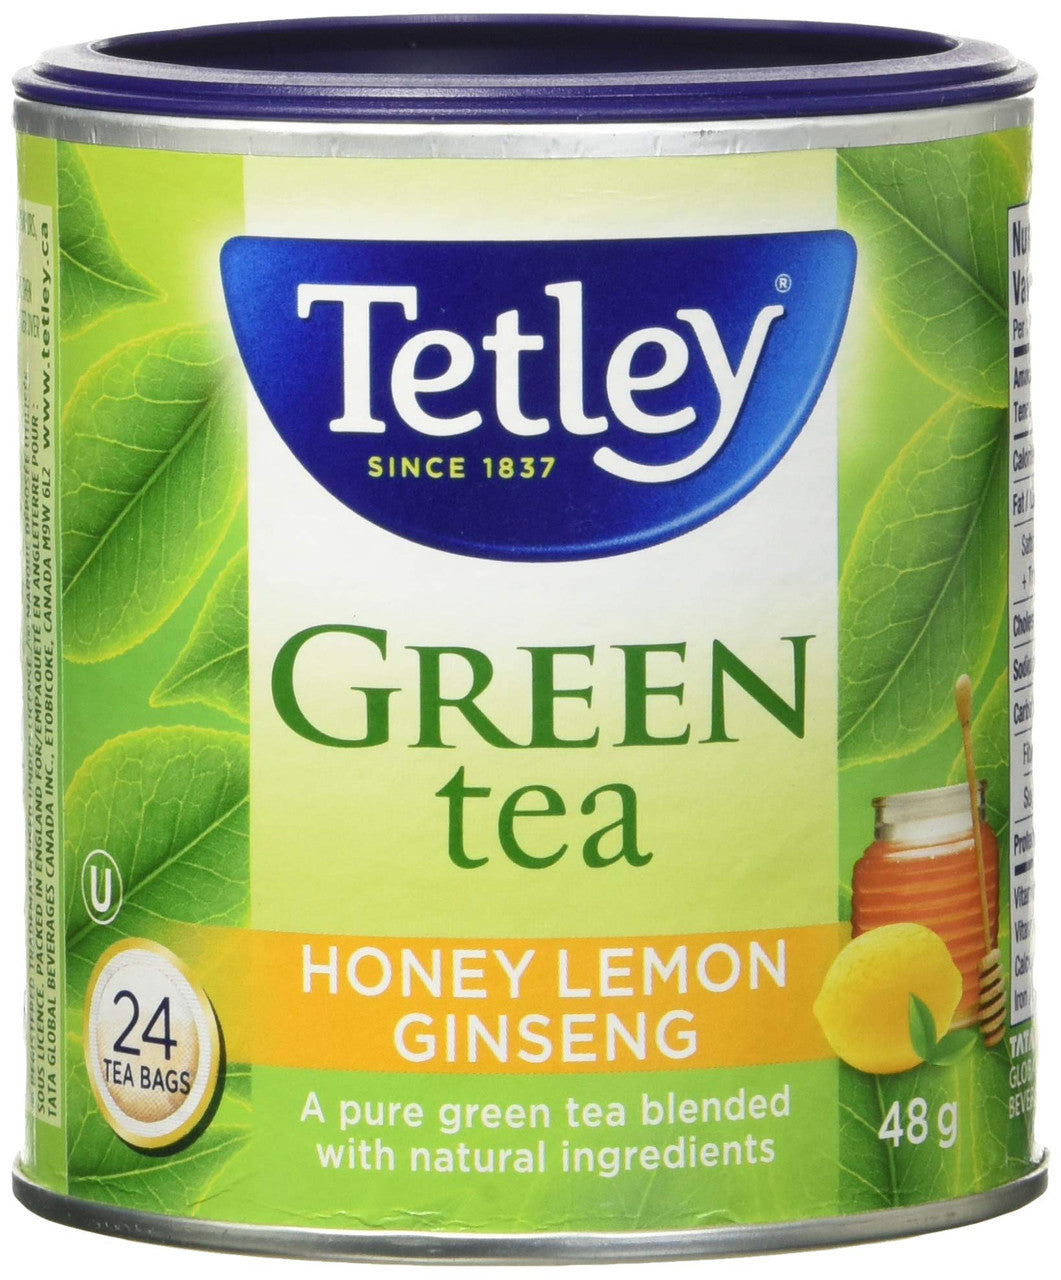 Tetley Honey Lemon Ginseng Green Tea 24ct, 48g/1.7oz (Imported from Canada)